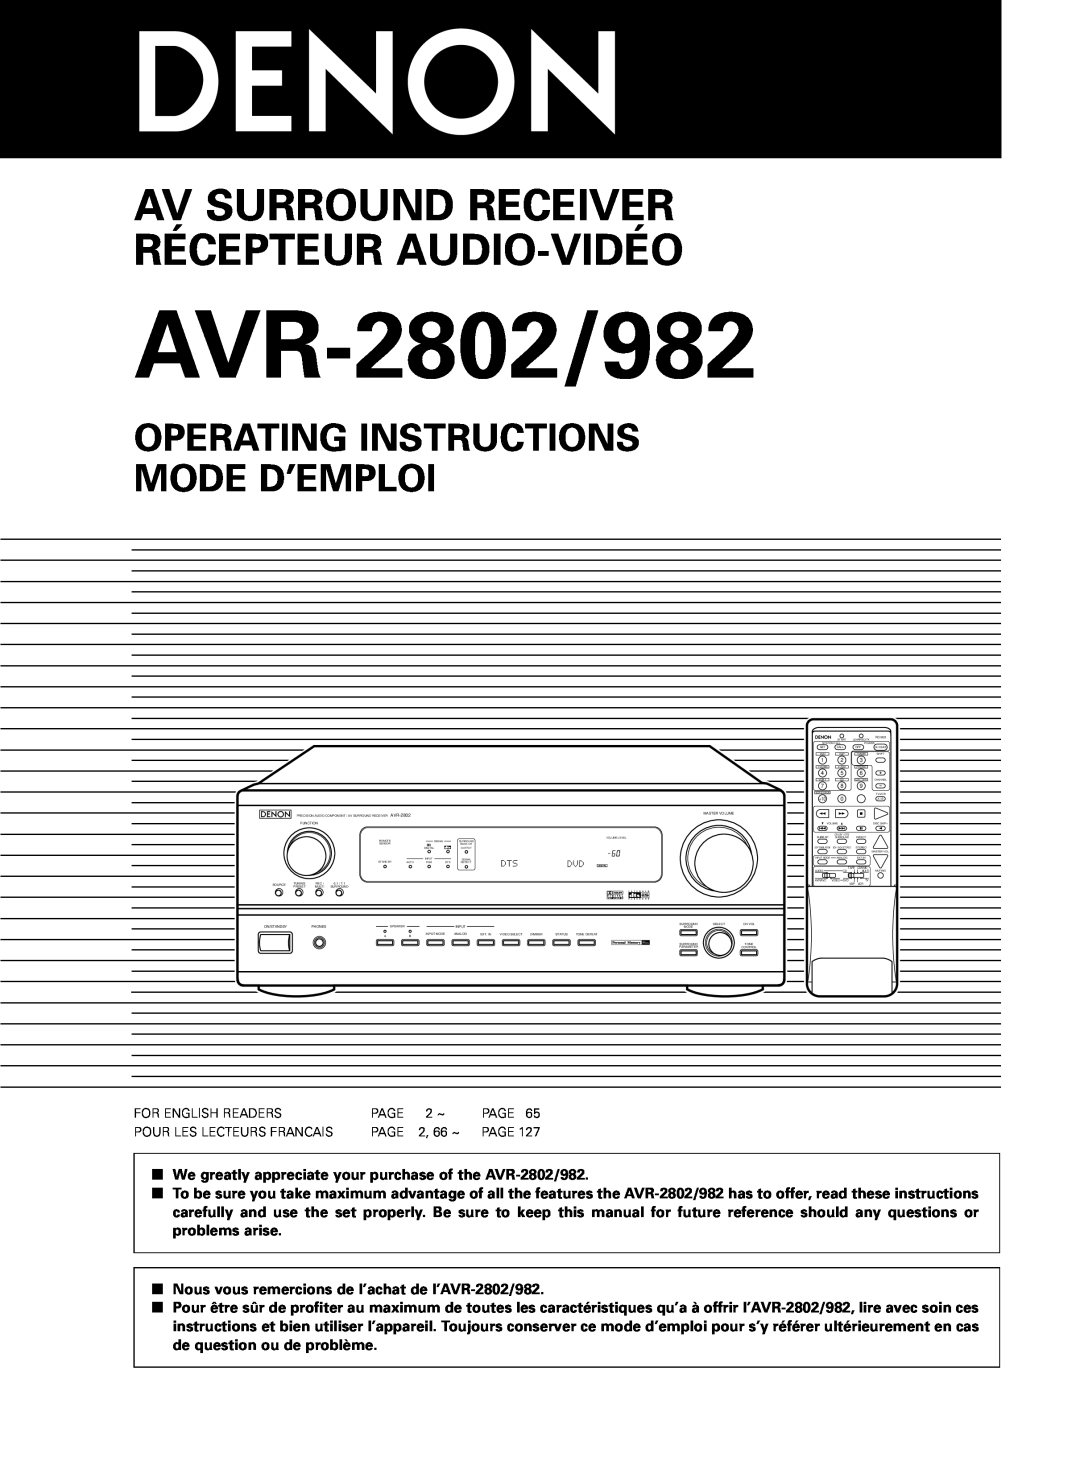 Denon AVR-2802/982 operating instructions Operating Instructions Mode D’Emploi, Av Surround Receiver Récepteur Audio-Vidéo 